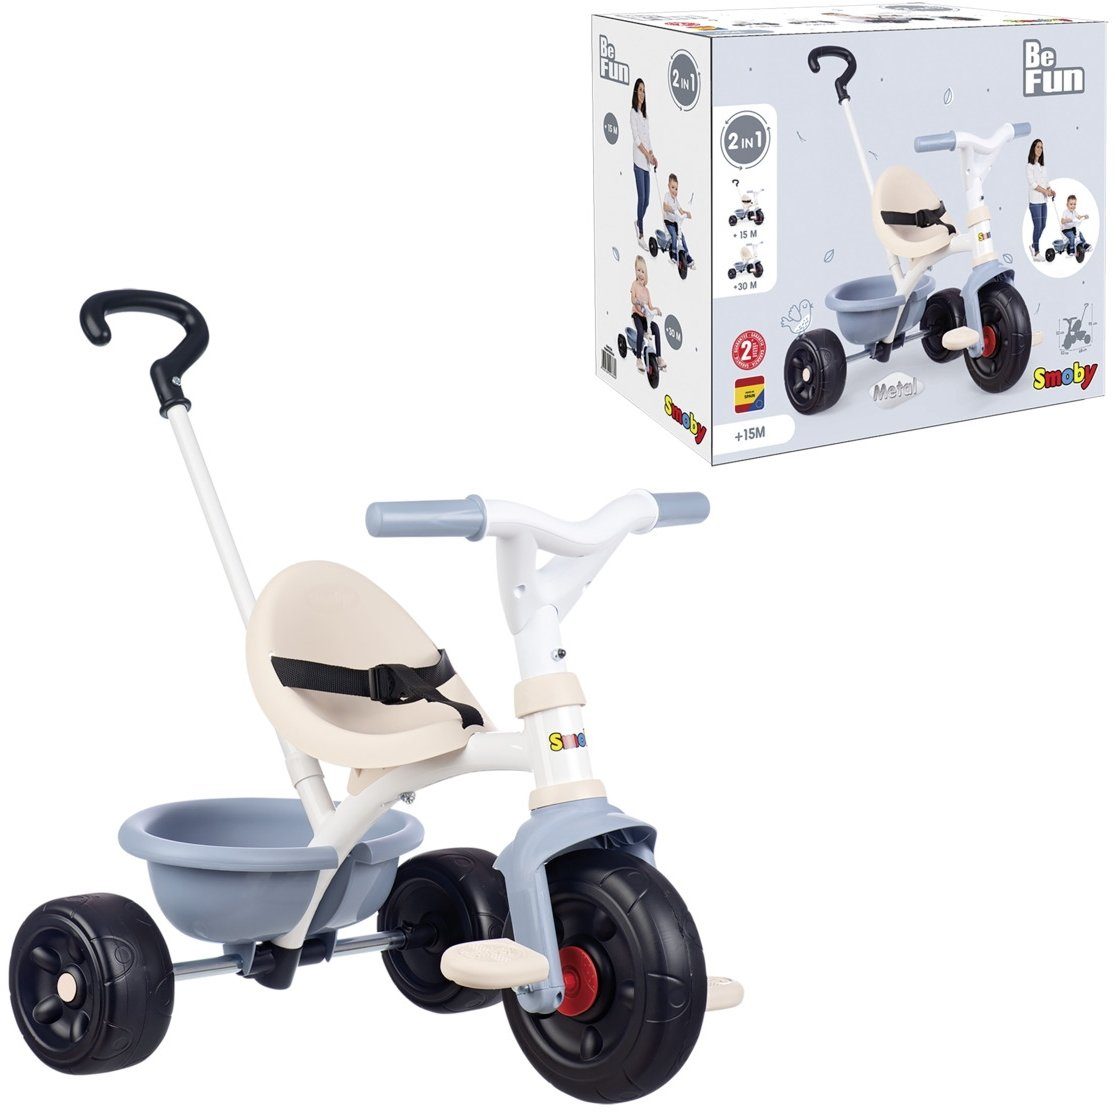 Smoby Dreirad Outdoor Spielzeug Fahrzeug Dreirad Be Fun blau 7600740336